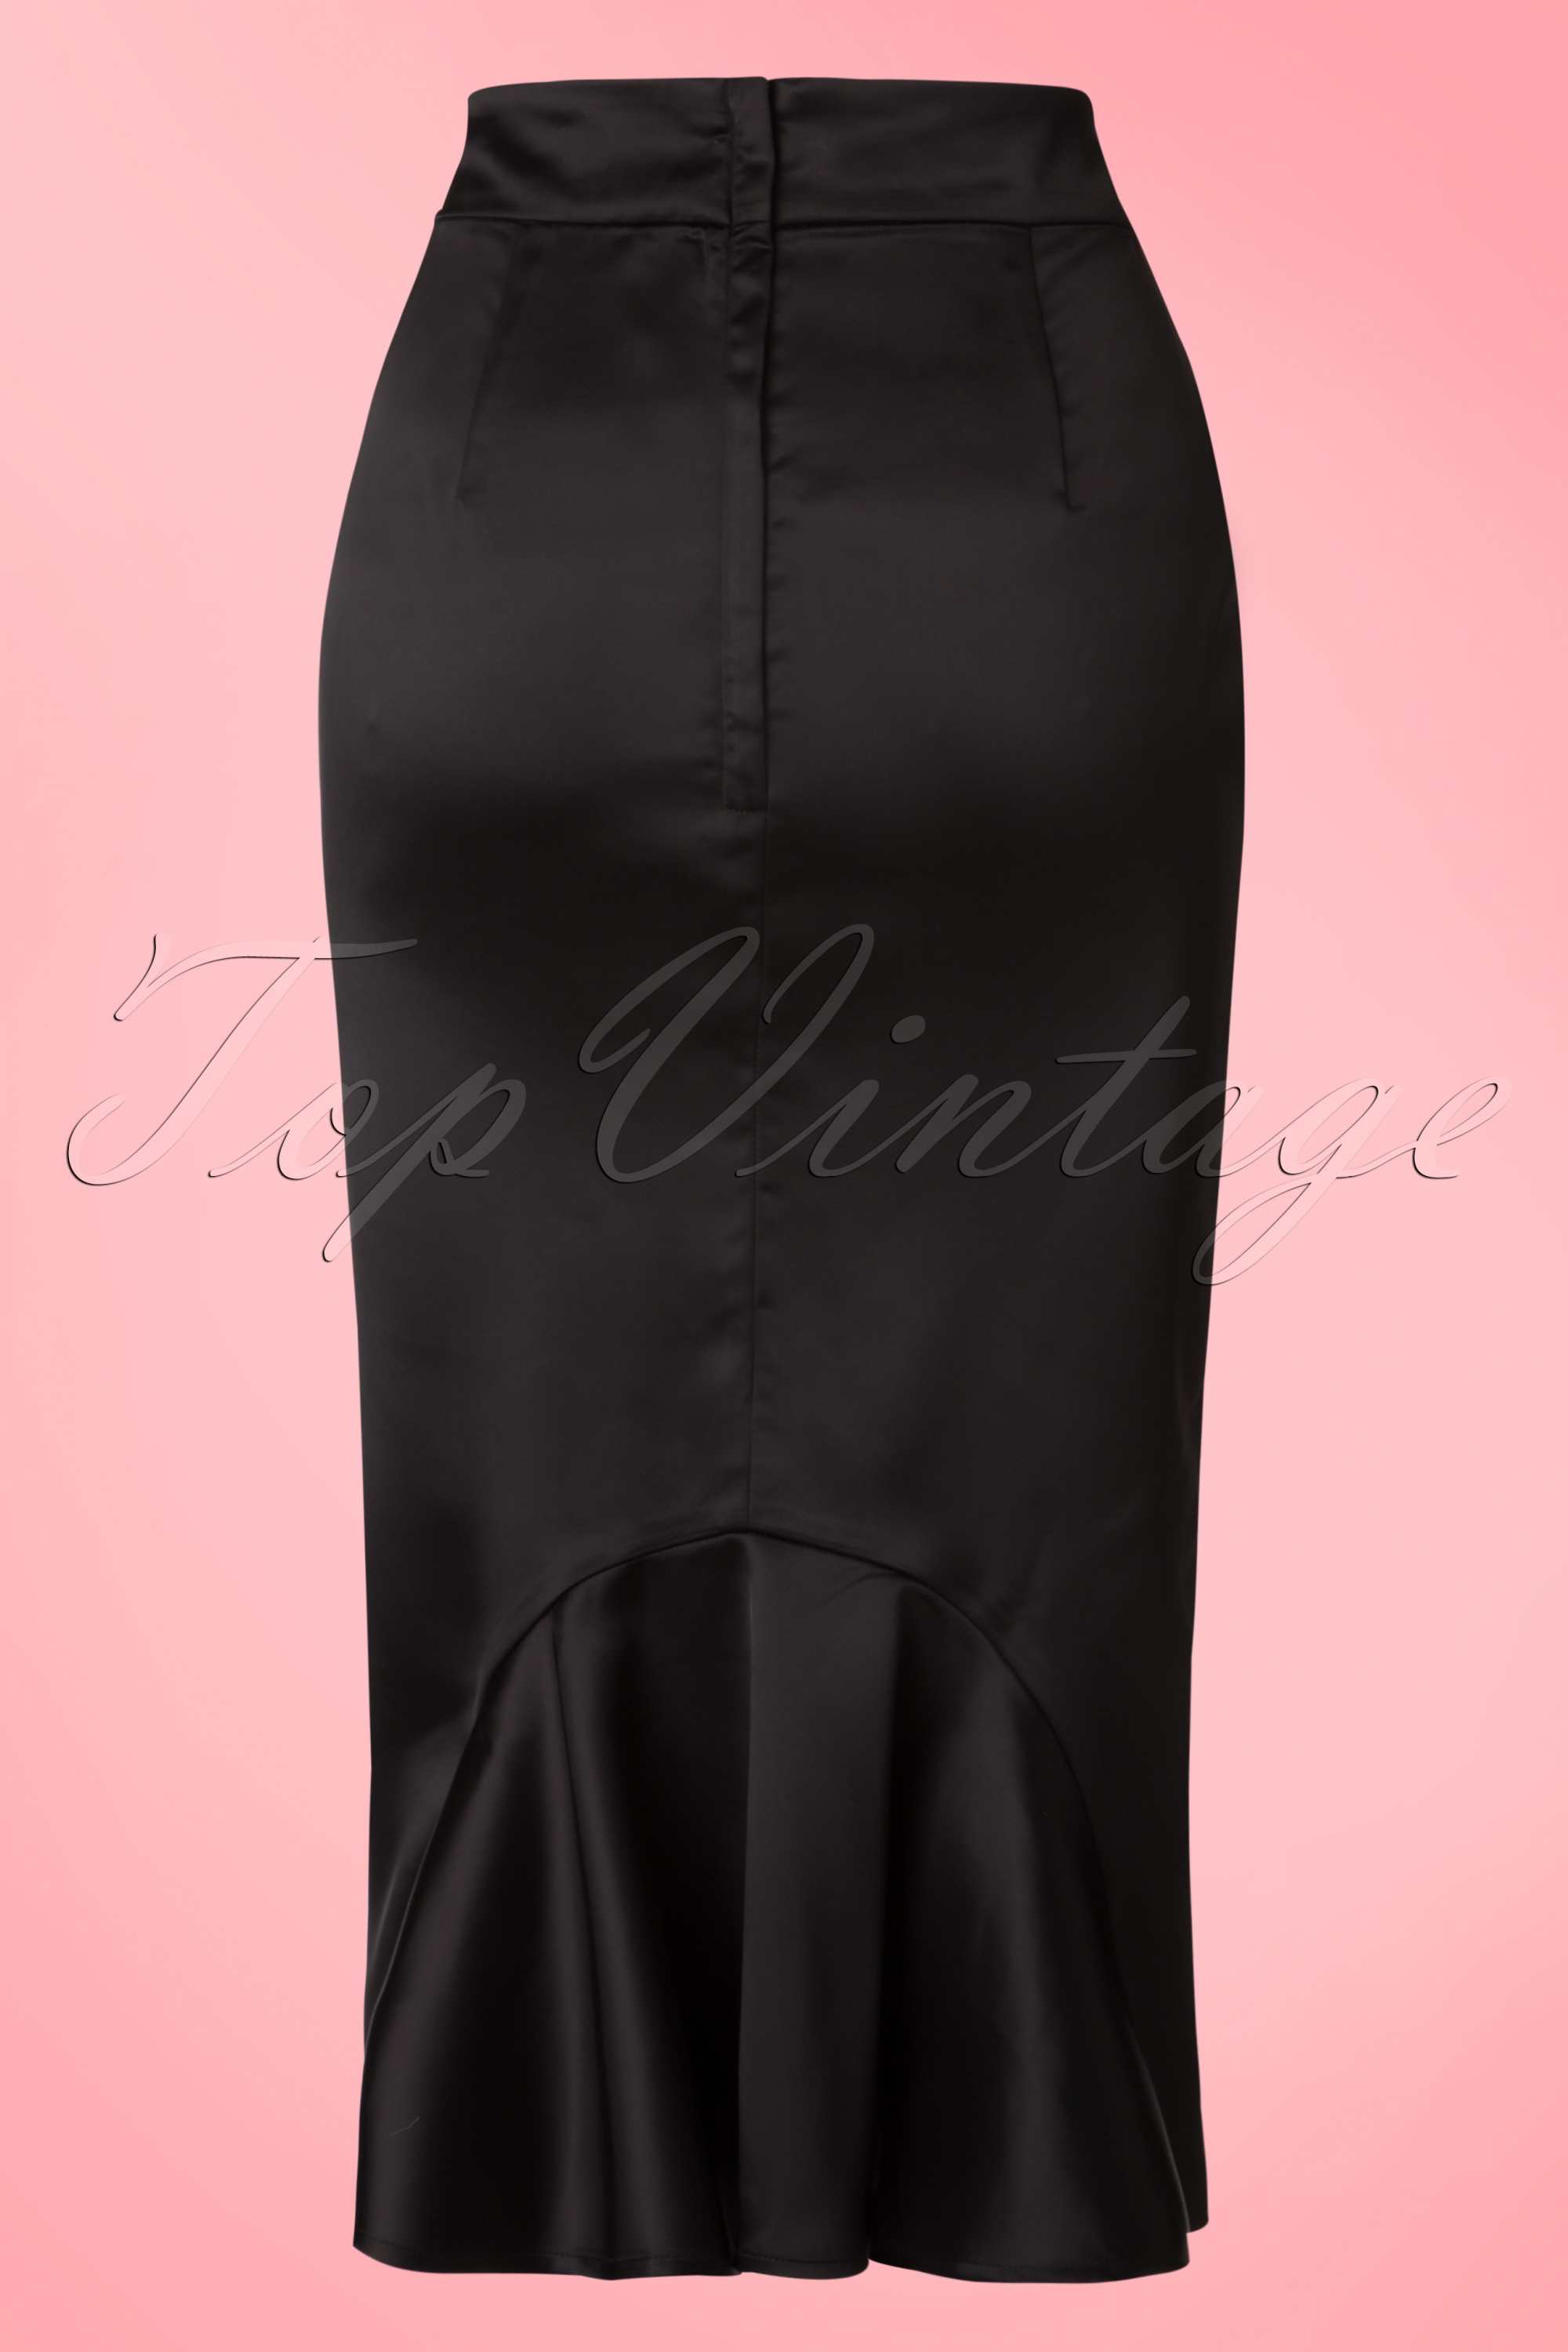 Collectif Clothing - Sakiko Fishtail-rok in zwart 4